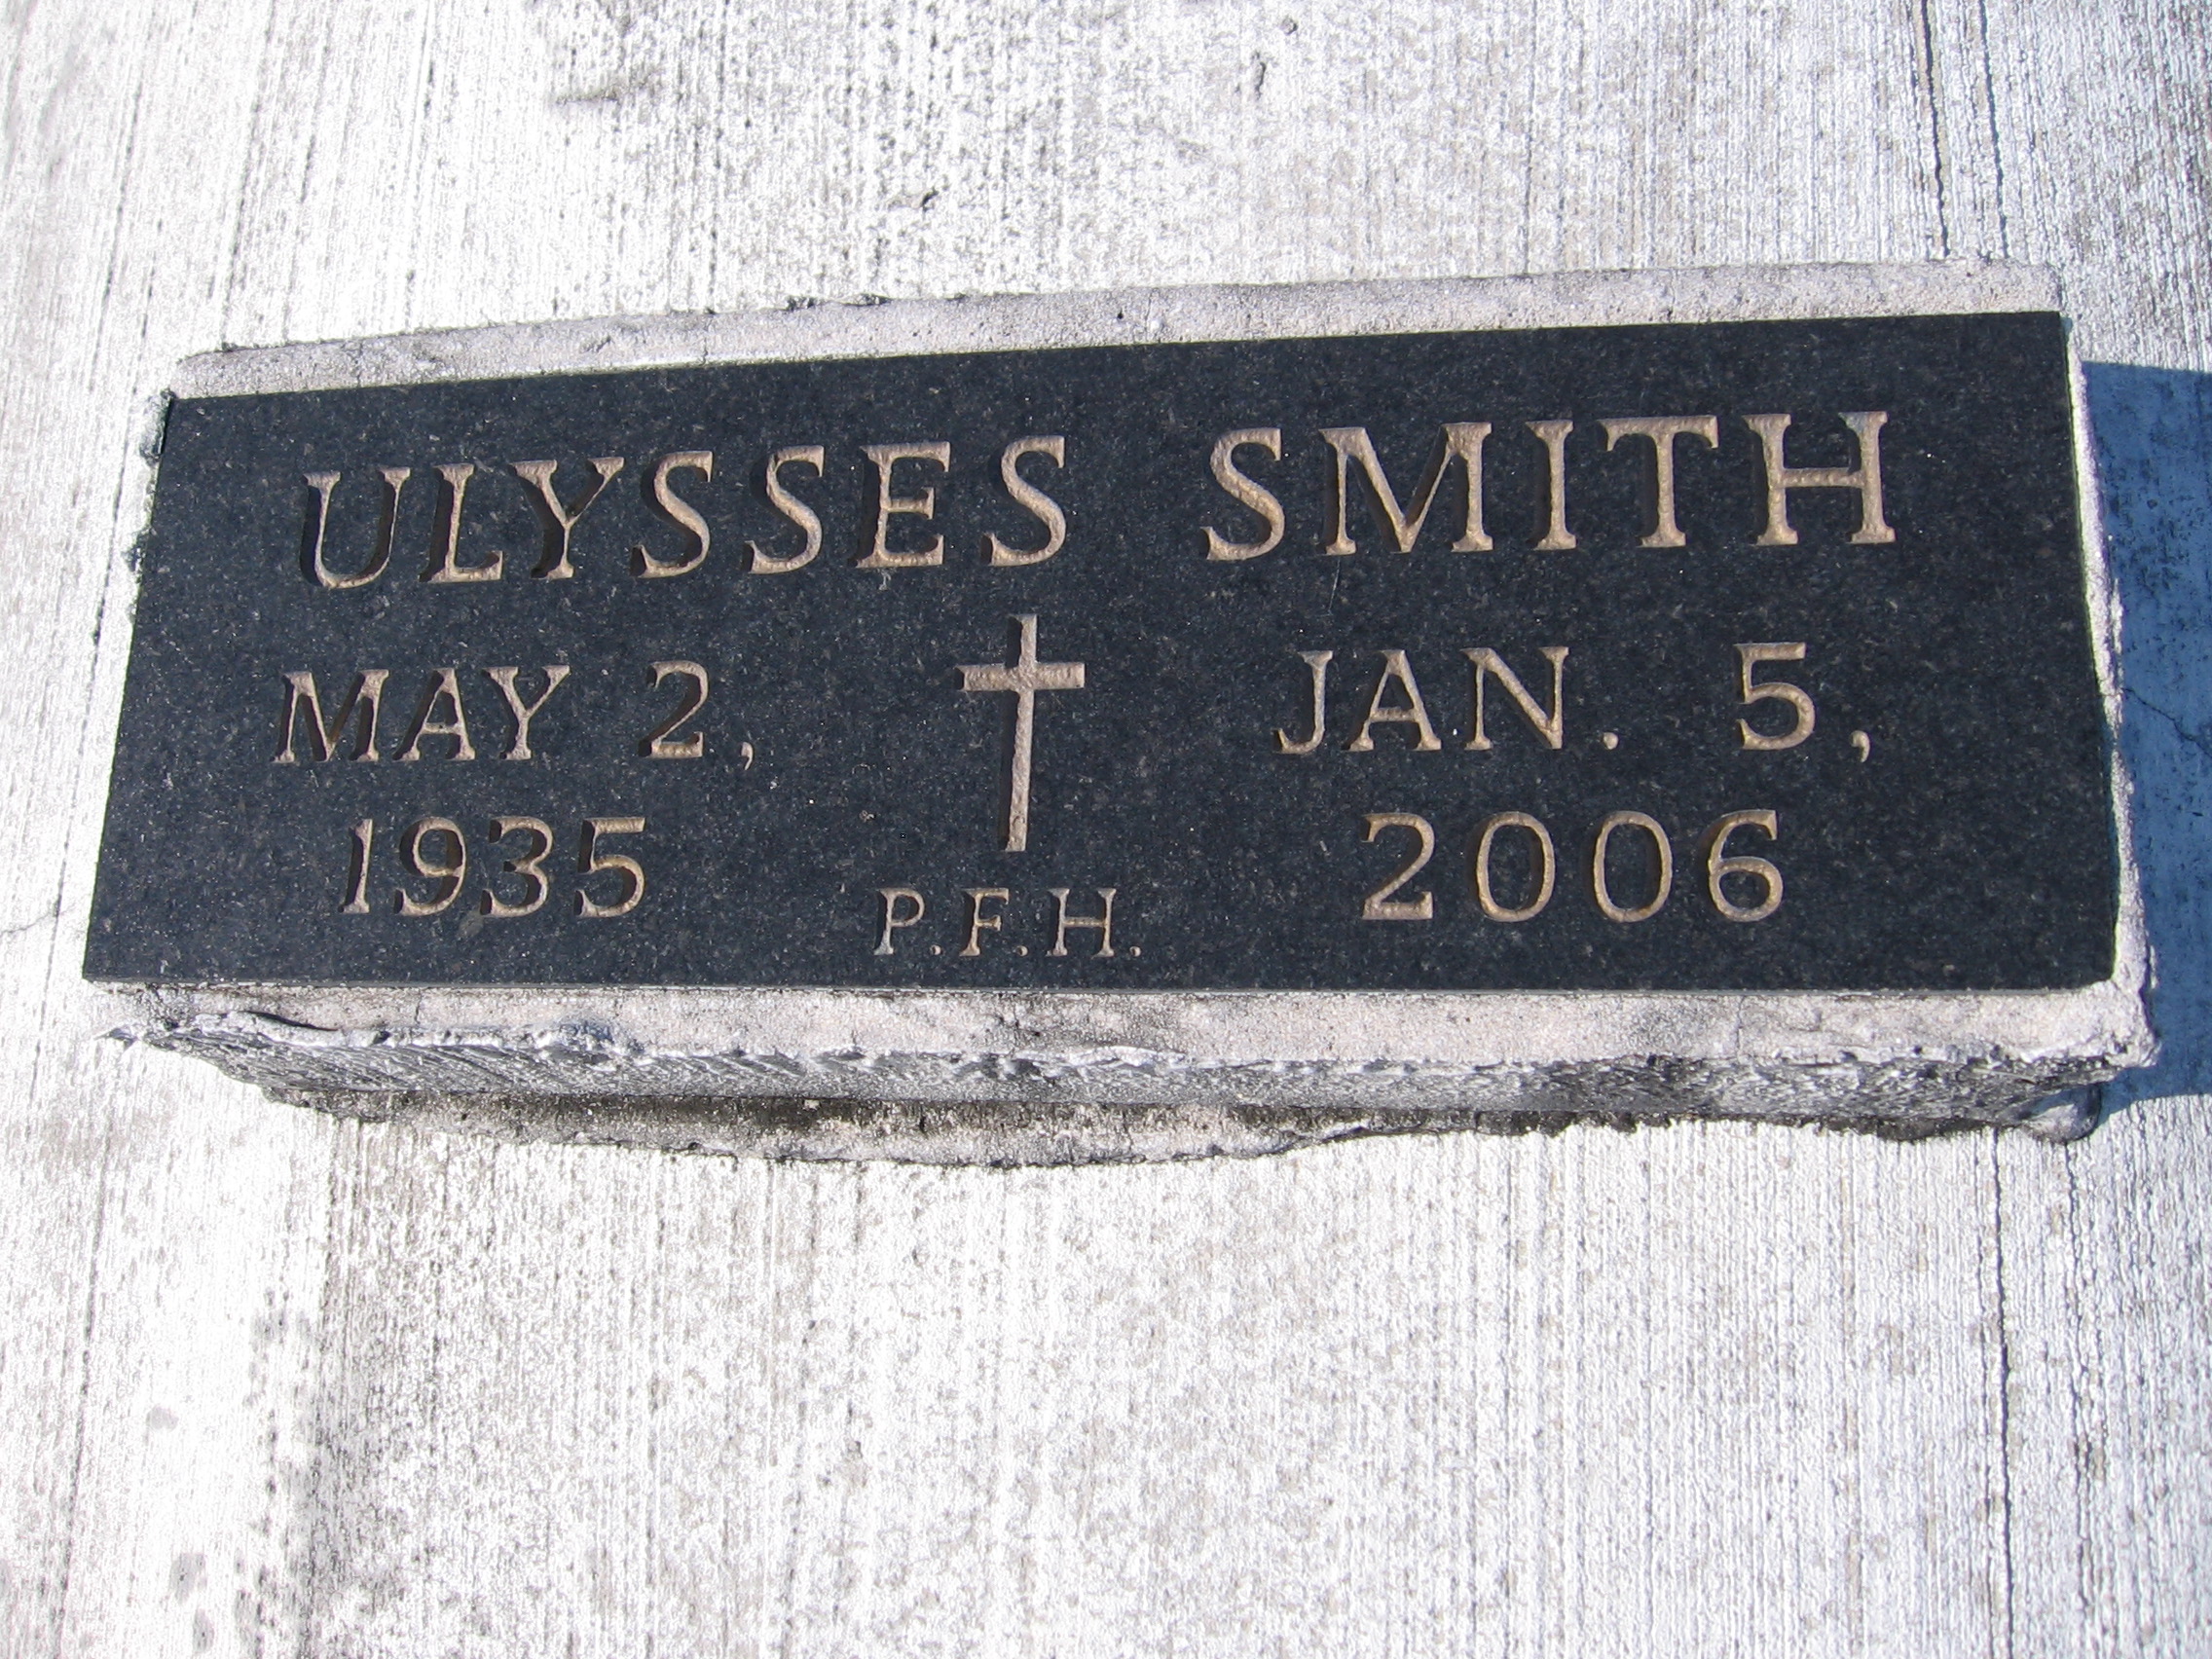 Ulysses Smith